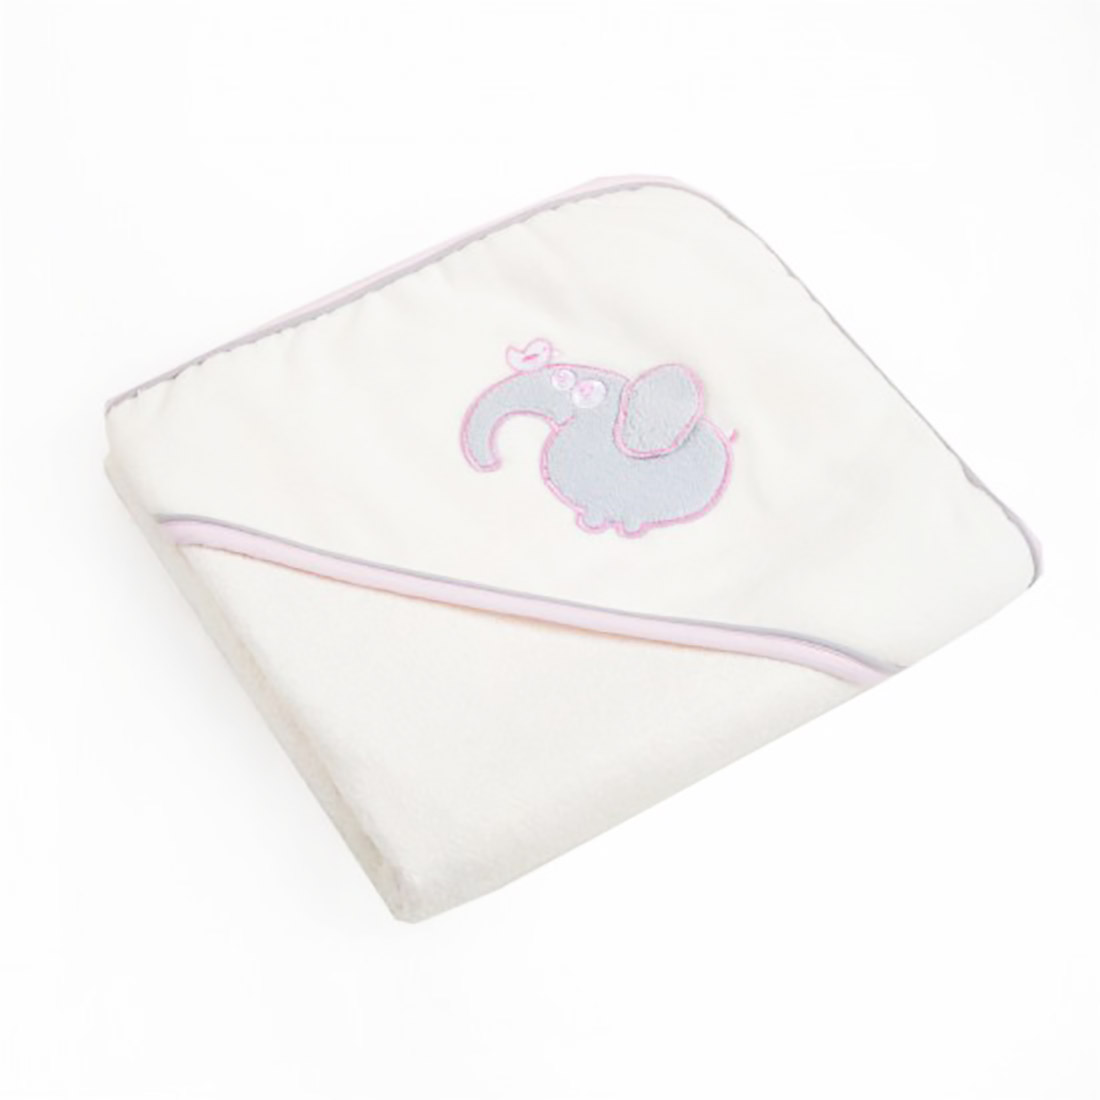 OrganicEra Organic Baby Hooded Towel, Pink Elephant